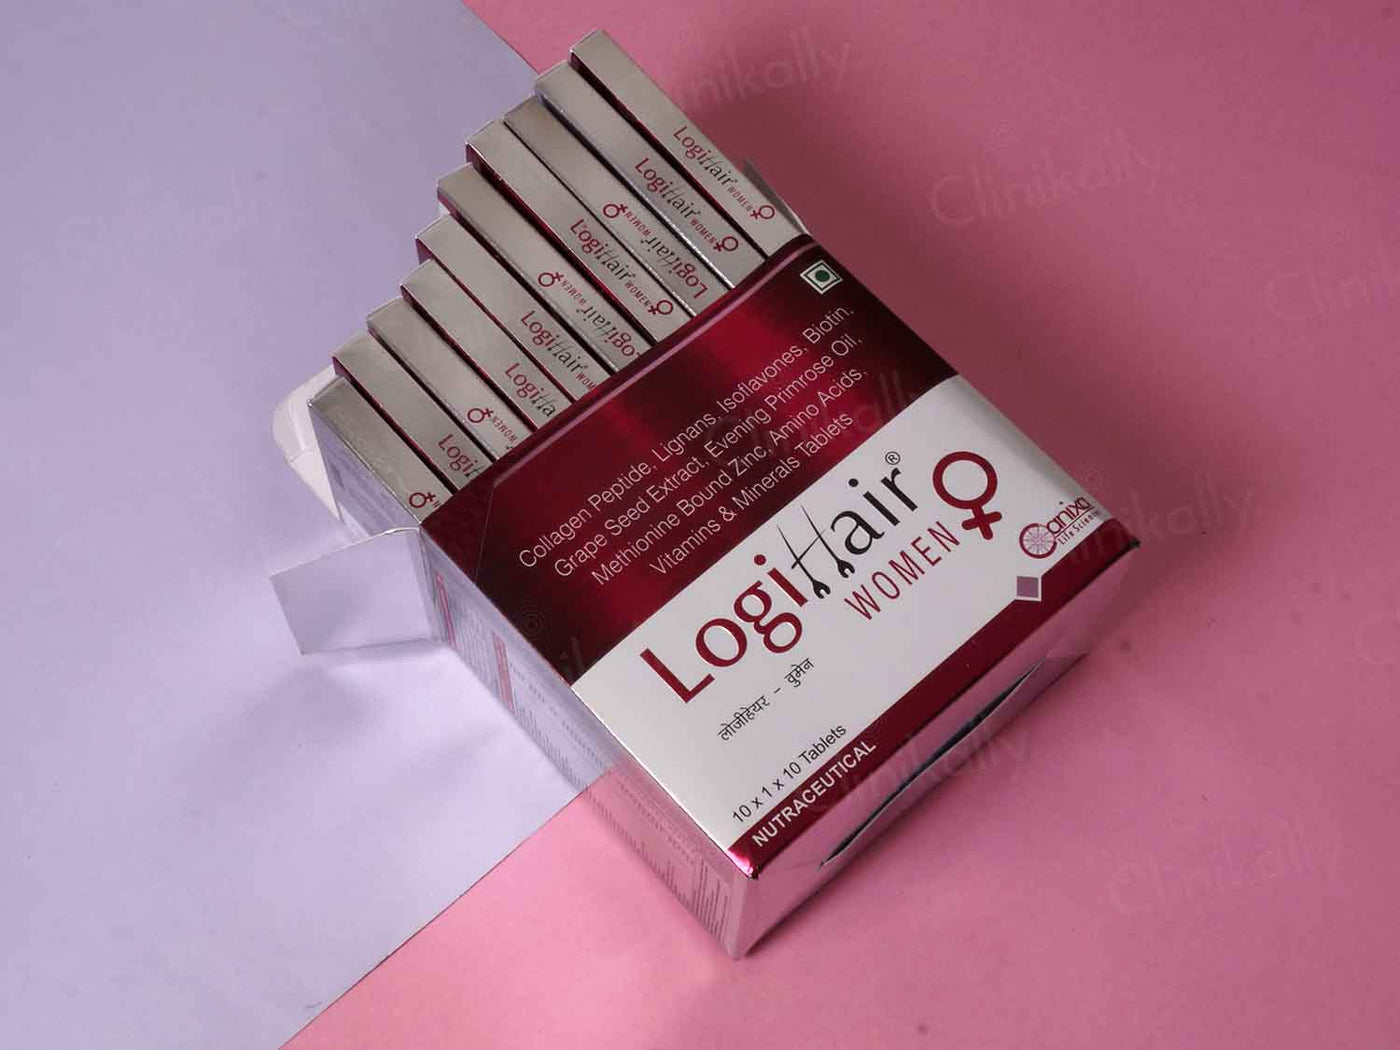 Logihair Women Tablet - Clinikally